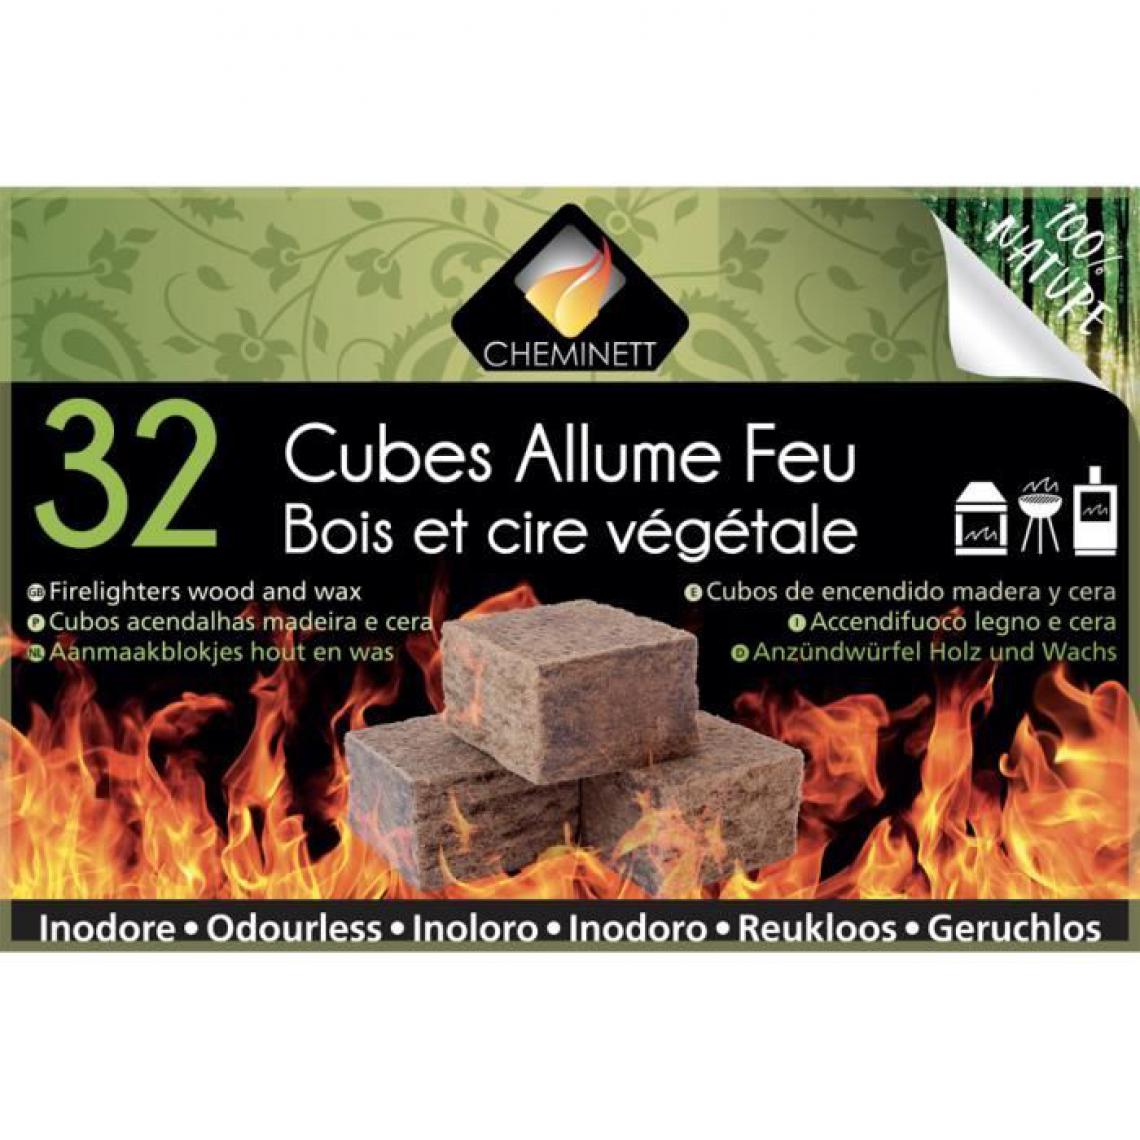 Cheminett - Allume feu 32 cubes - Accessoires barbecue